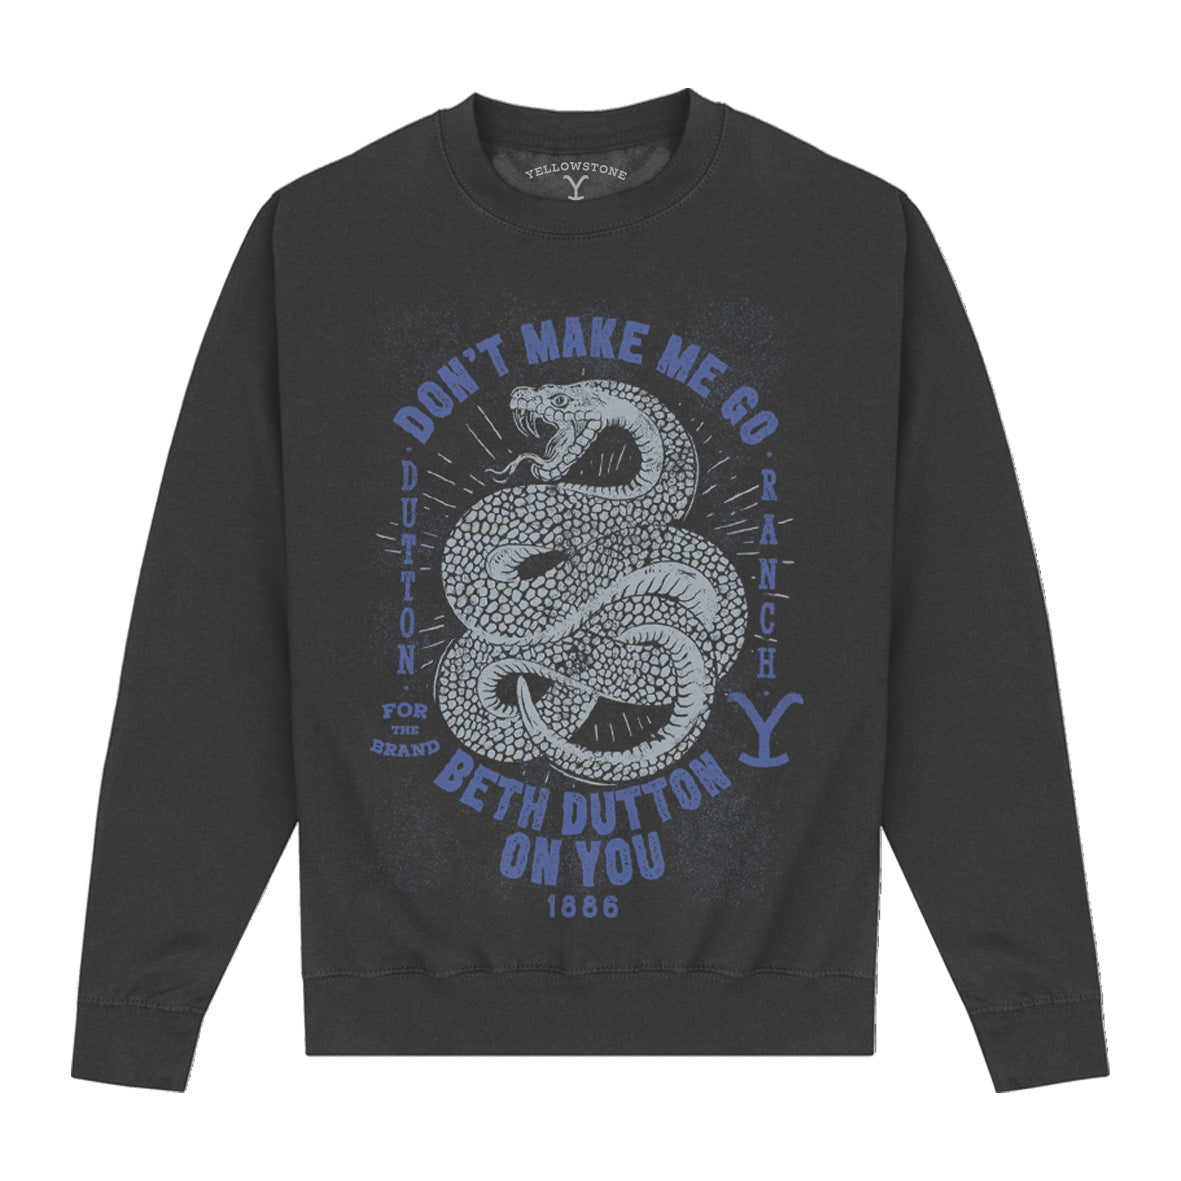 Yellowstone Beth Dutton Snake Sweatshirt